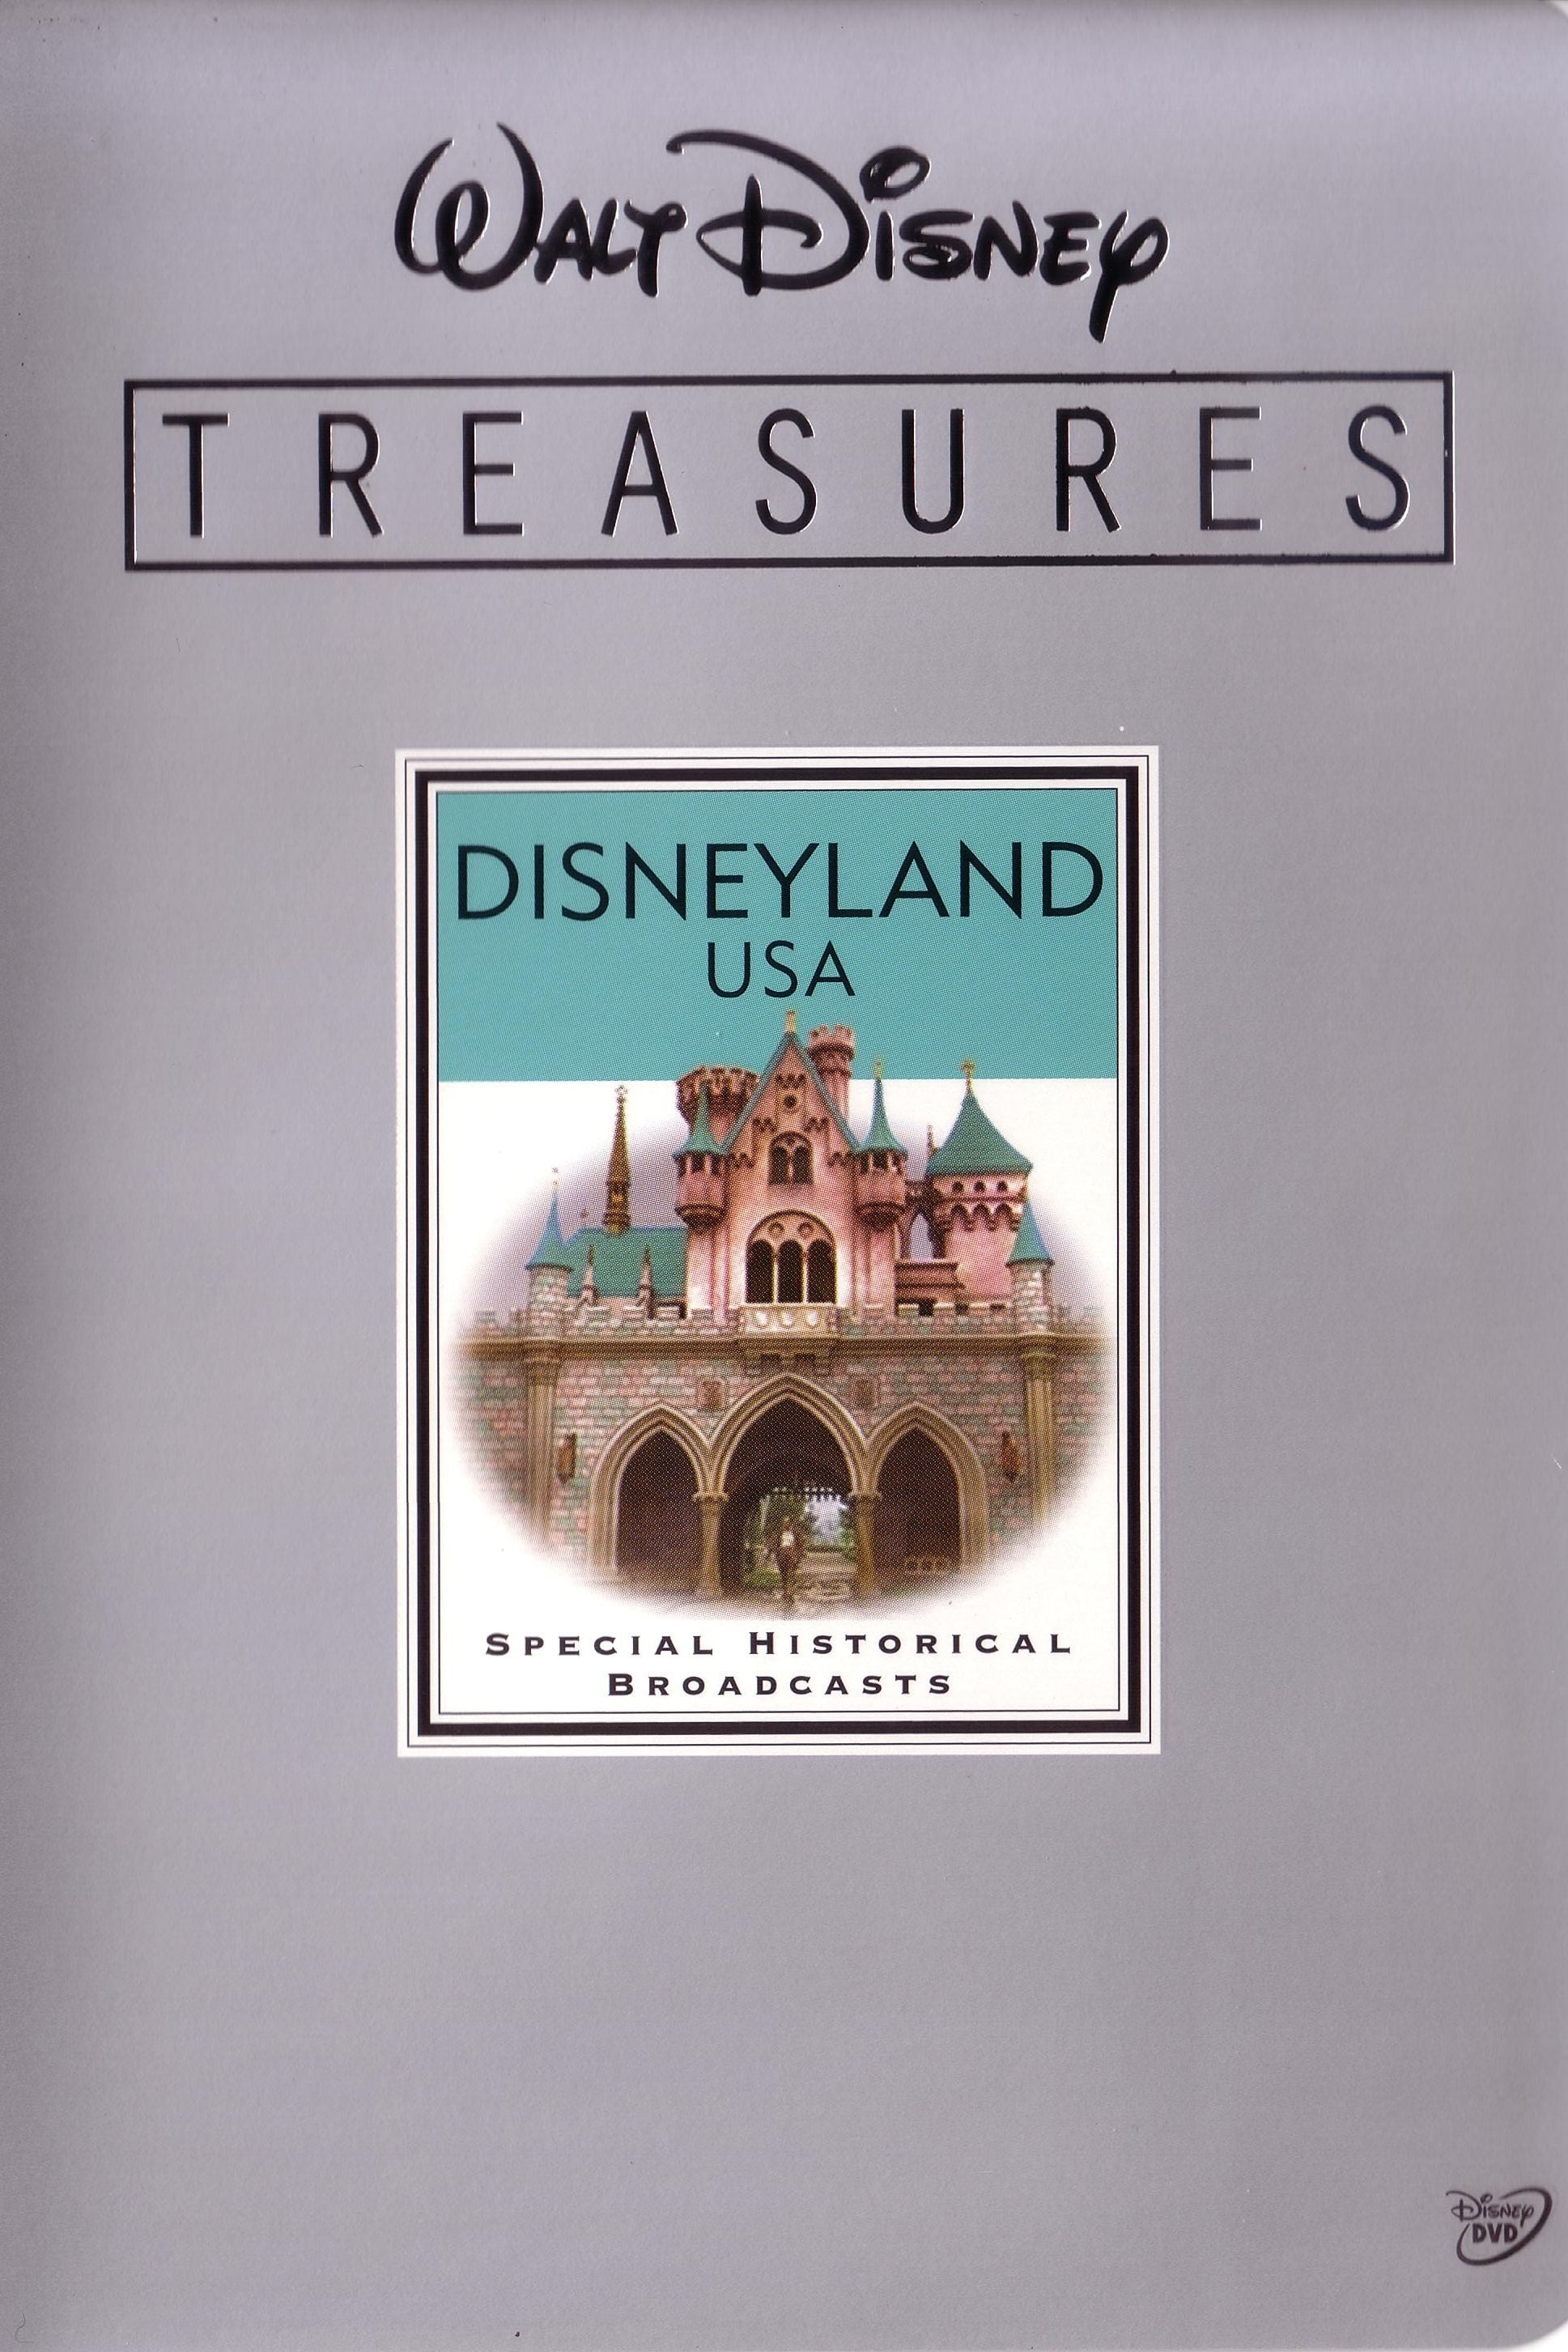 Walt Disney Treasures - Disneyland USA (2001)